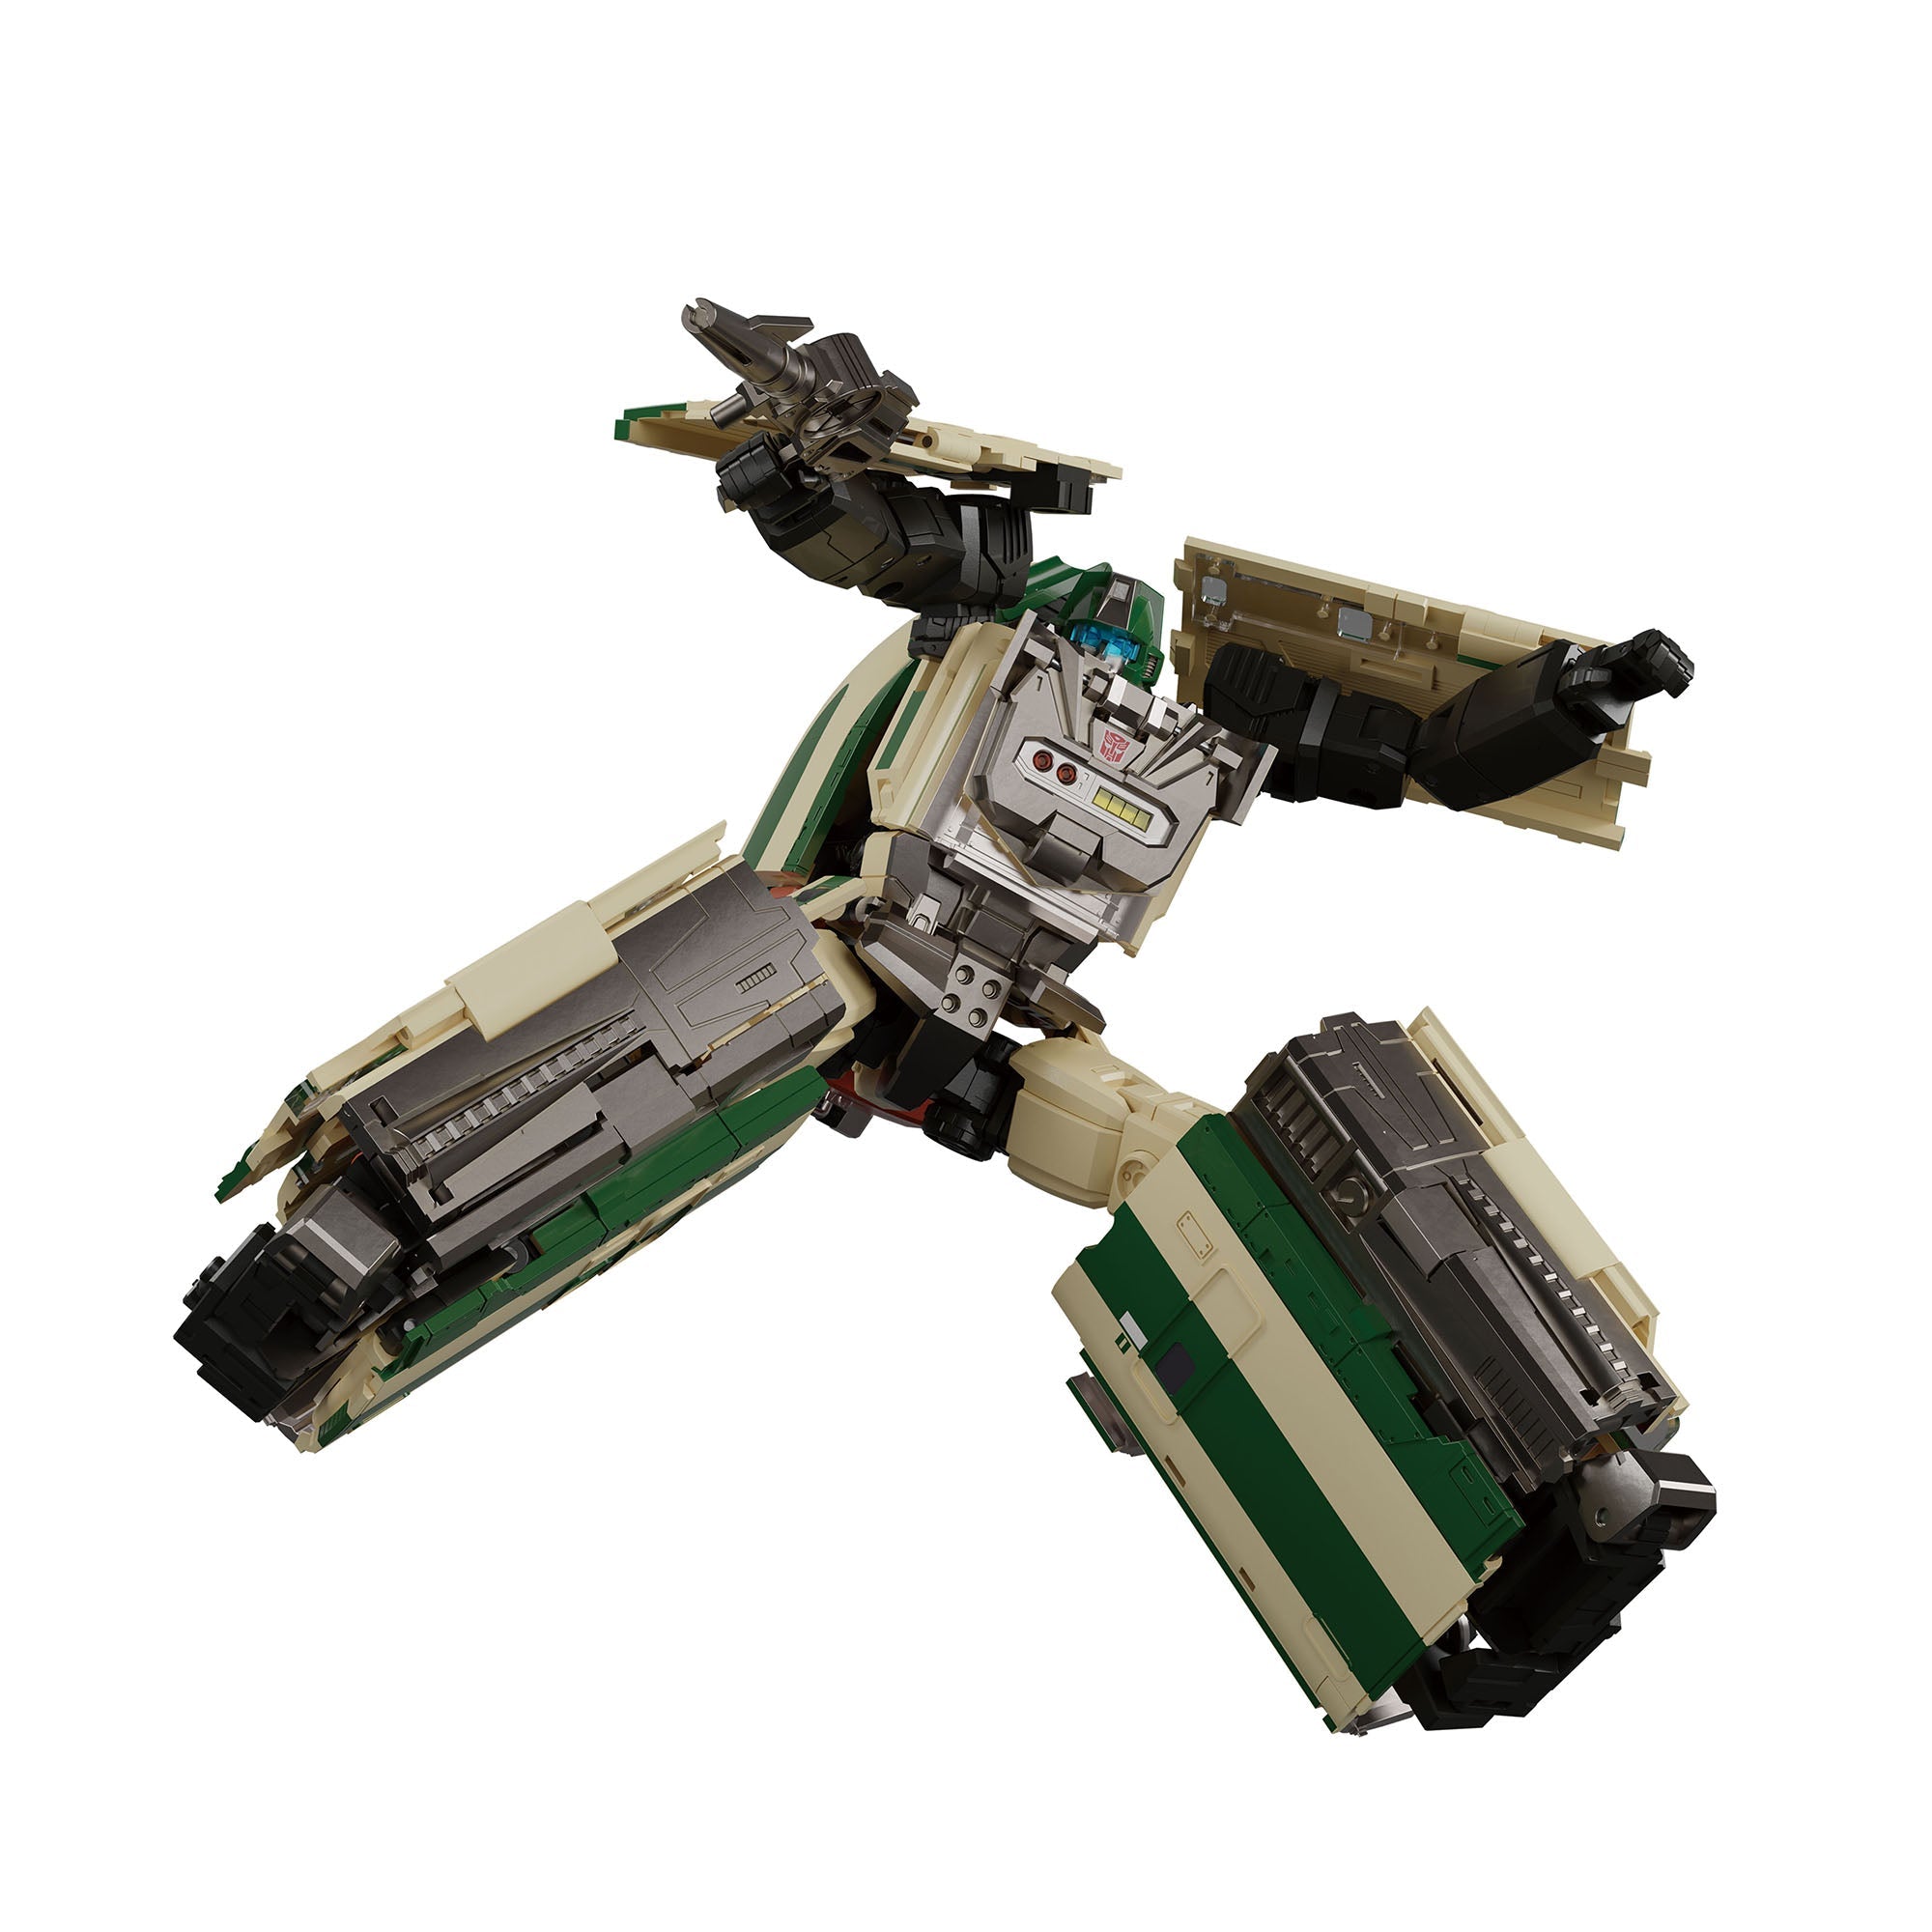 TakaraTomy - Transformers Masterpiece G - MPG-03 - Trainbot Yukikaze (Raiden Combiner) - Marvelous Toys